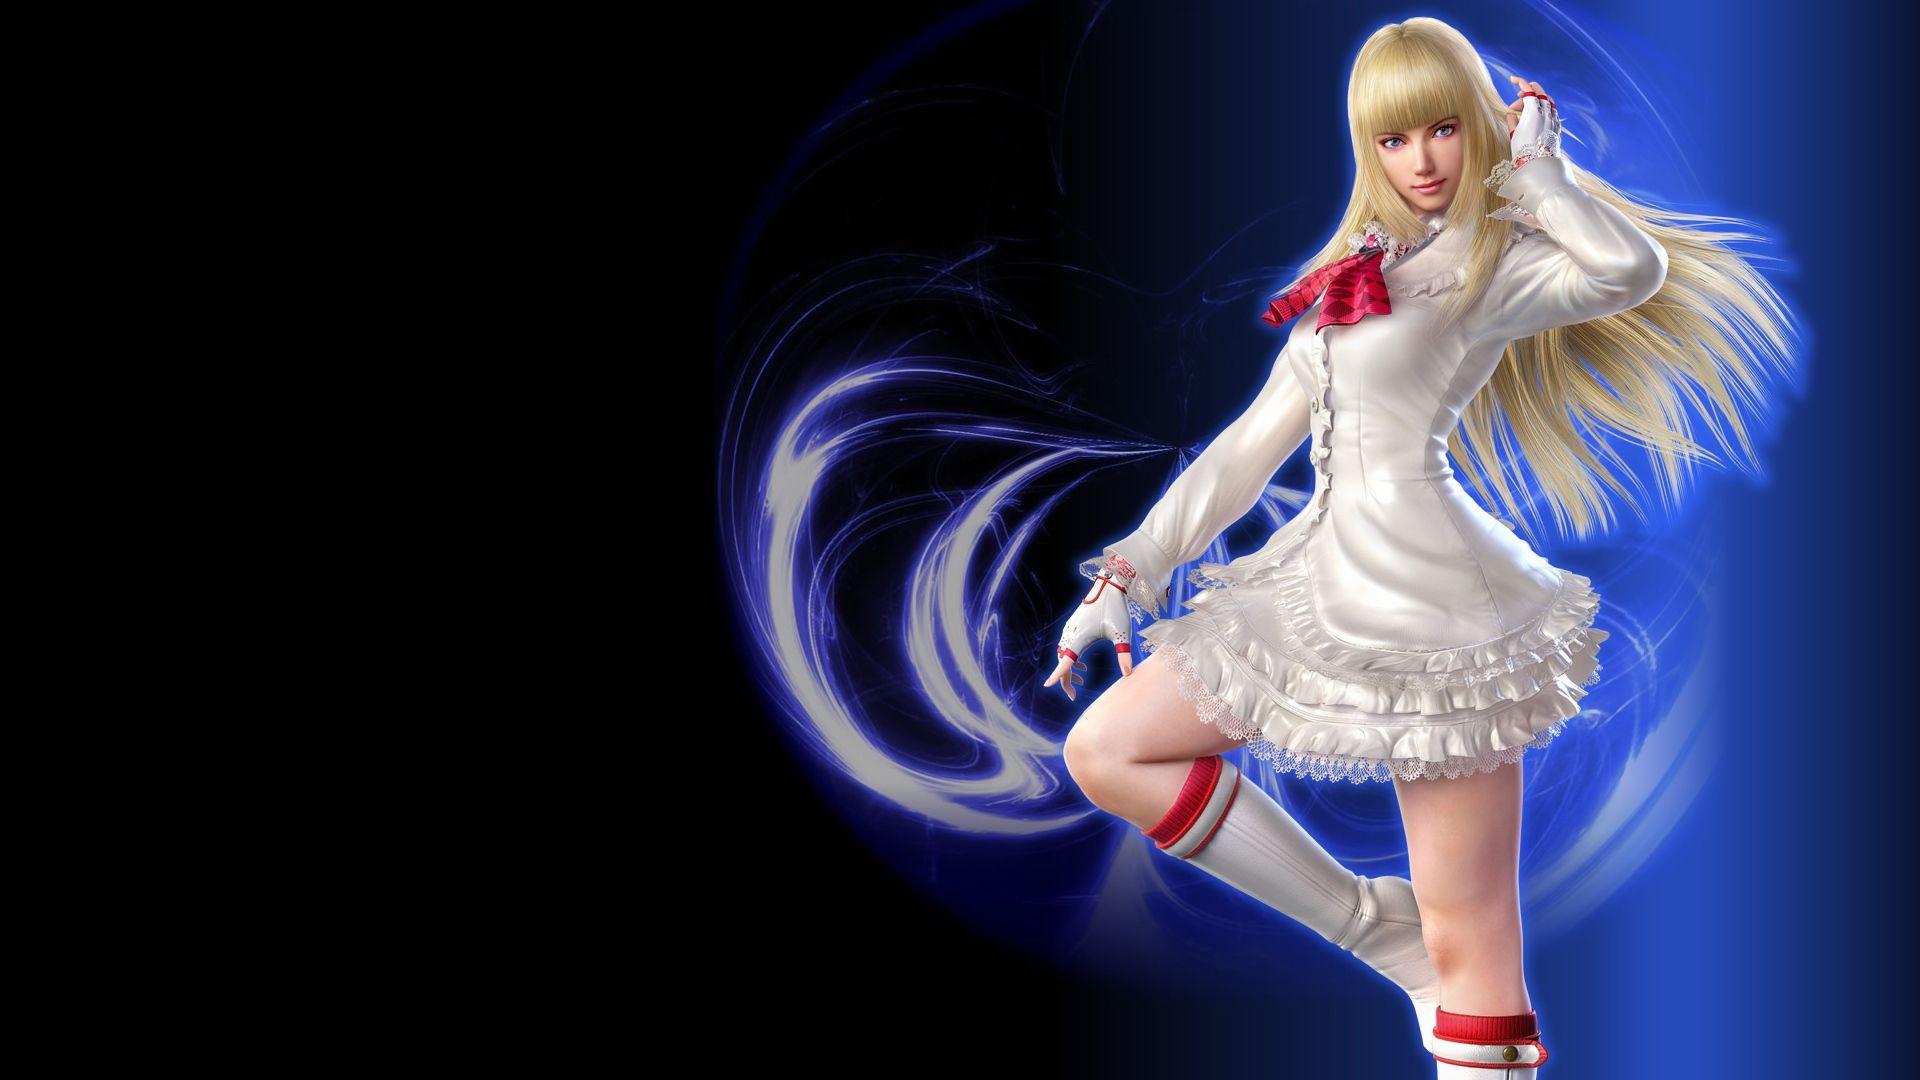 Tekken 7 Girl, HD Games, 4k Wallpaper, Image, Background, Photo